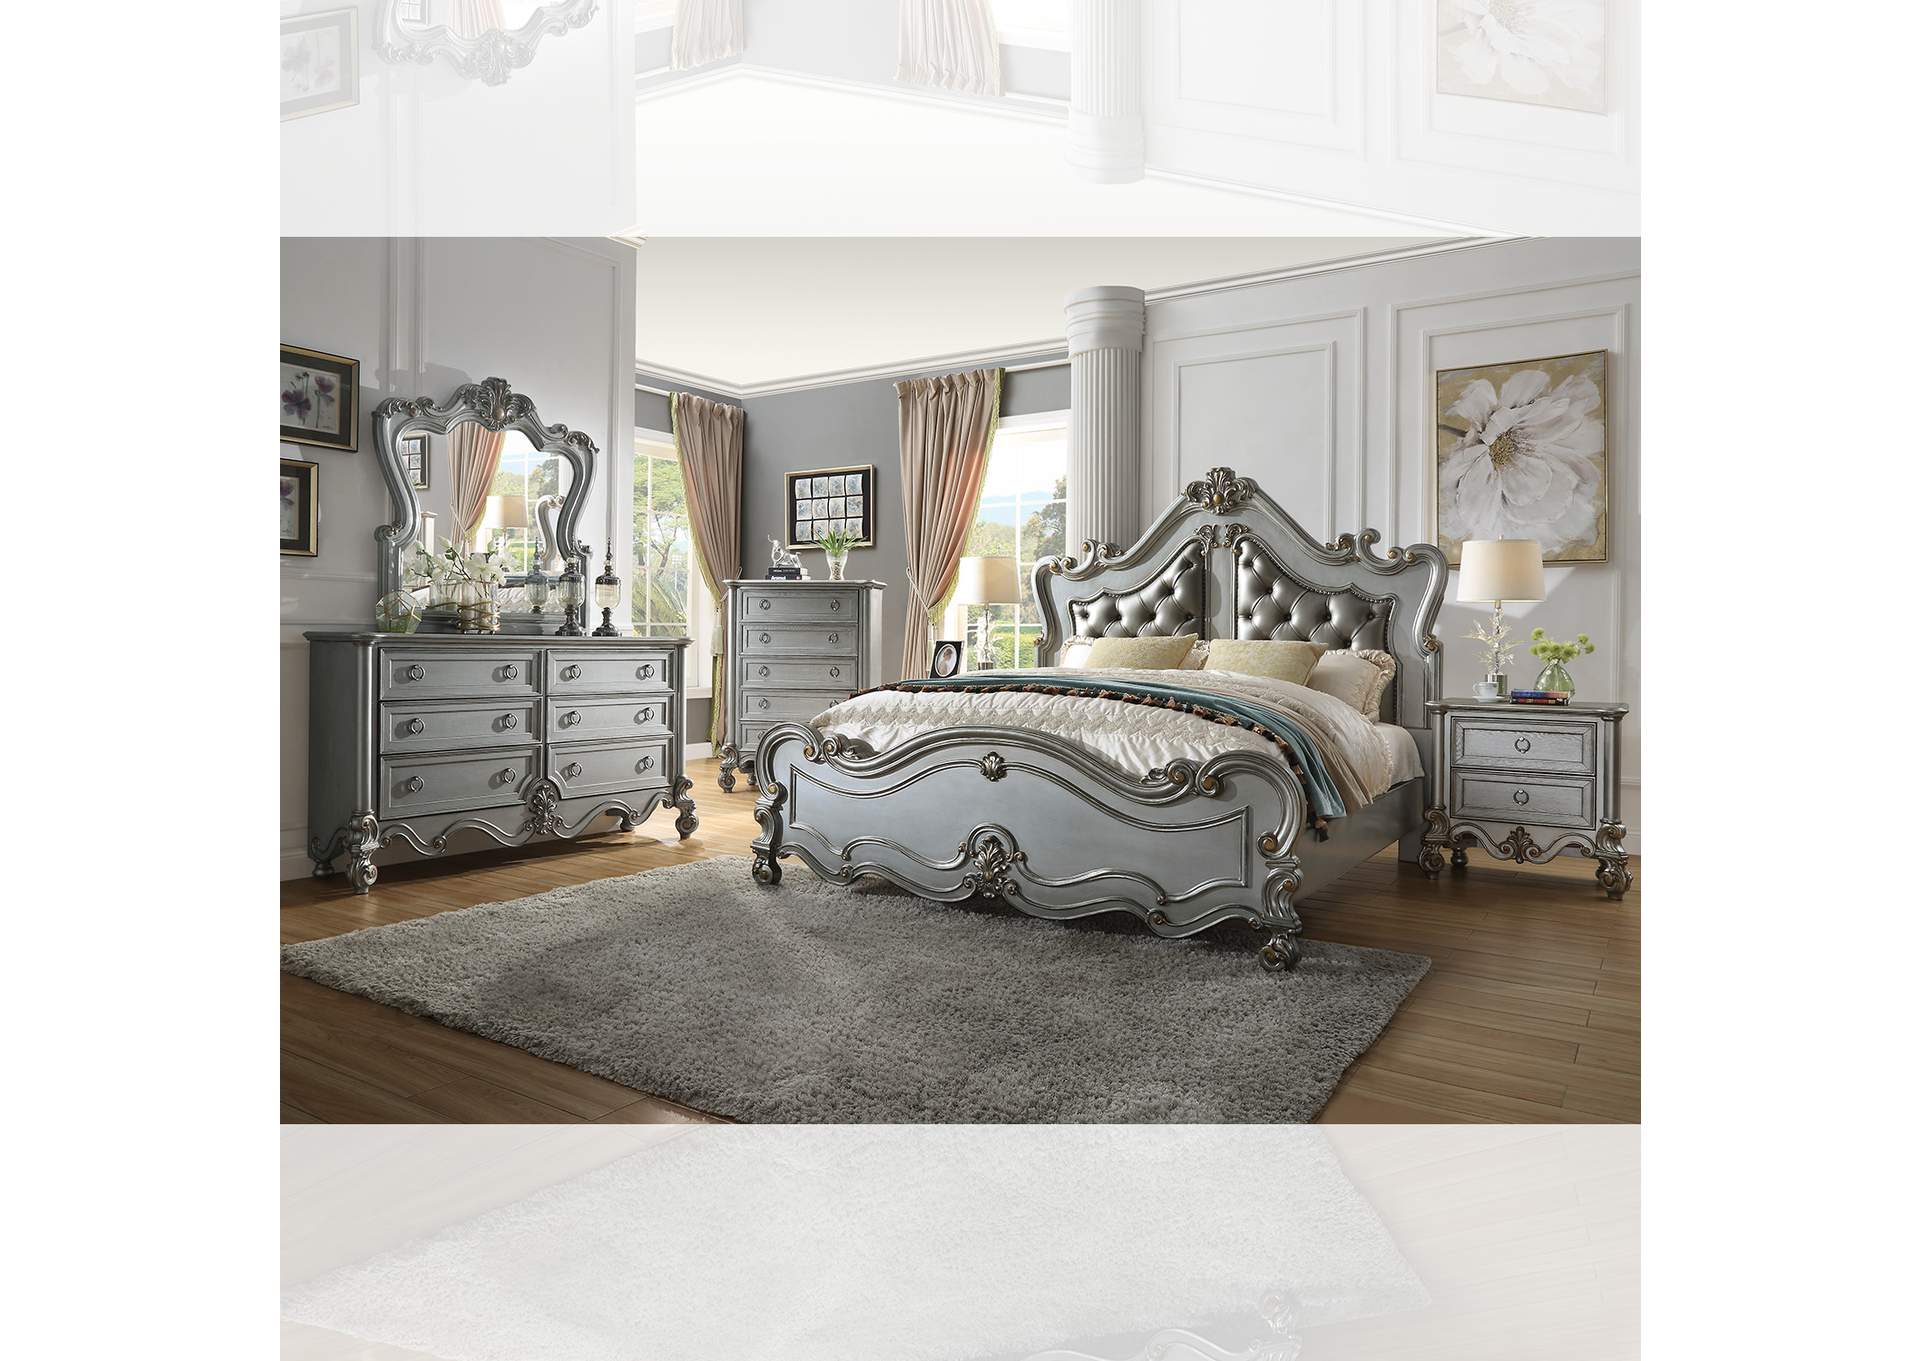 HD-999 - Ek 5Pc Bedroom Set,Homey Design